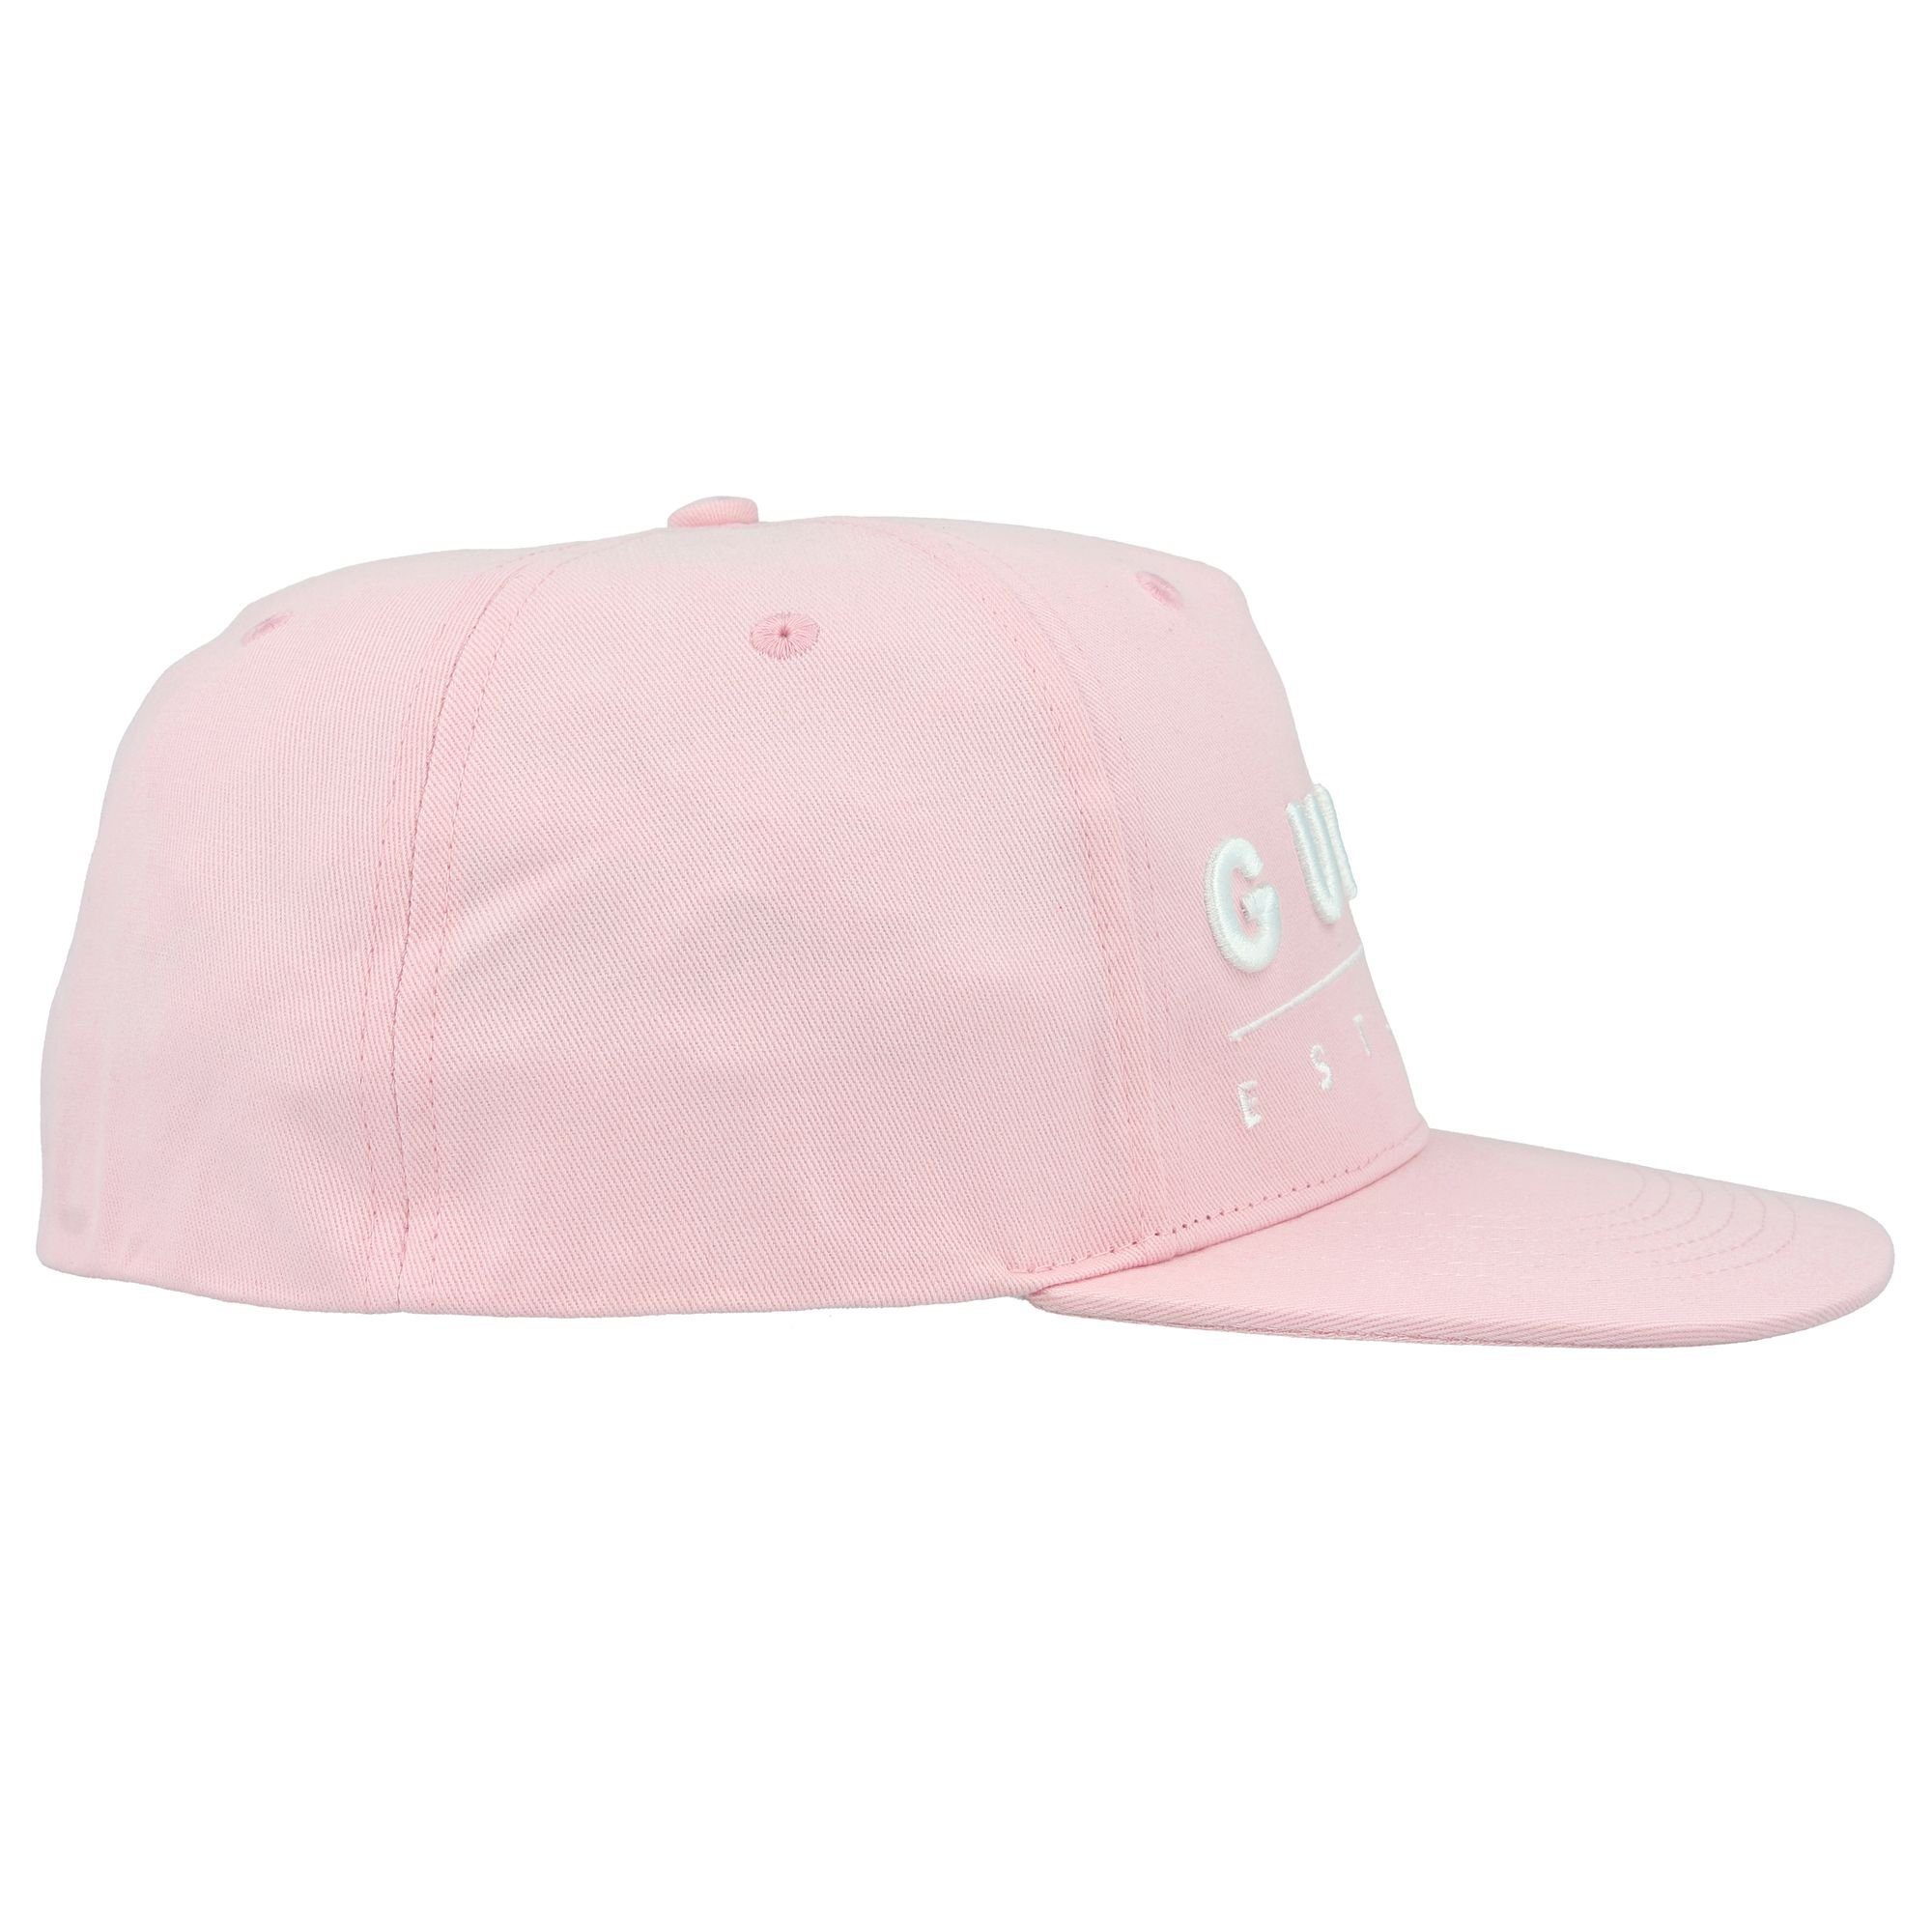 Cap Baseball Guess pink Nola